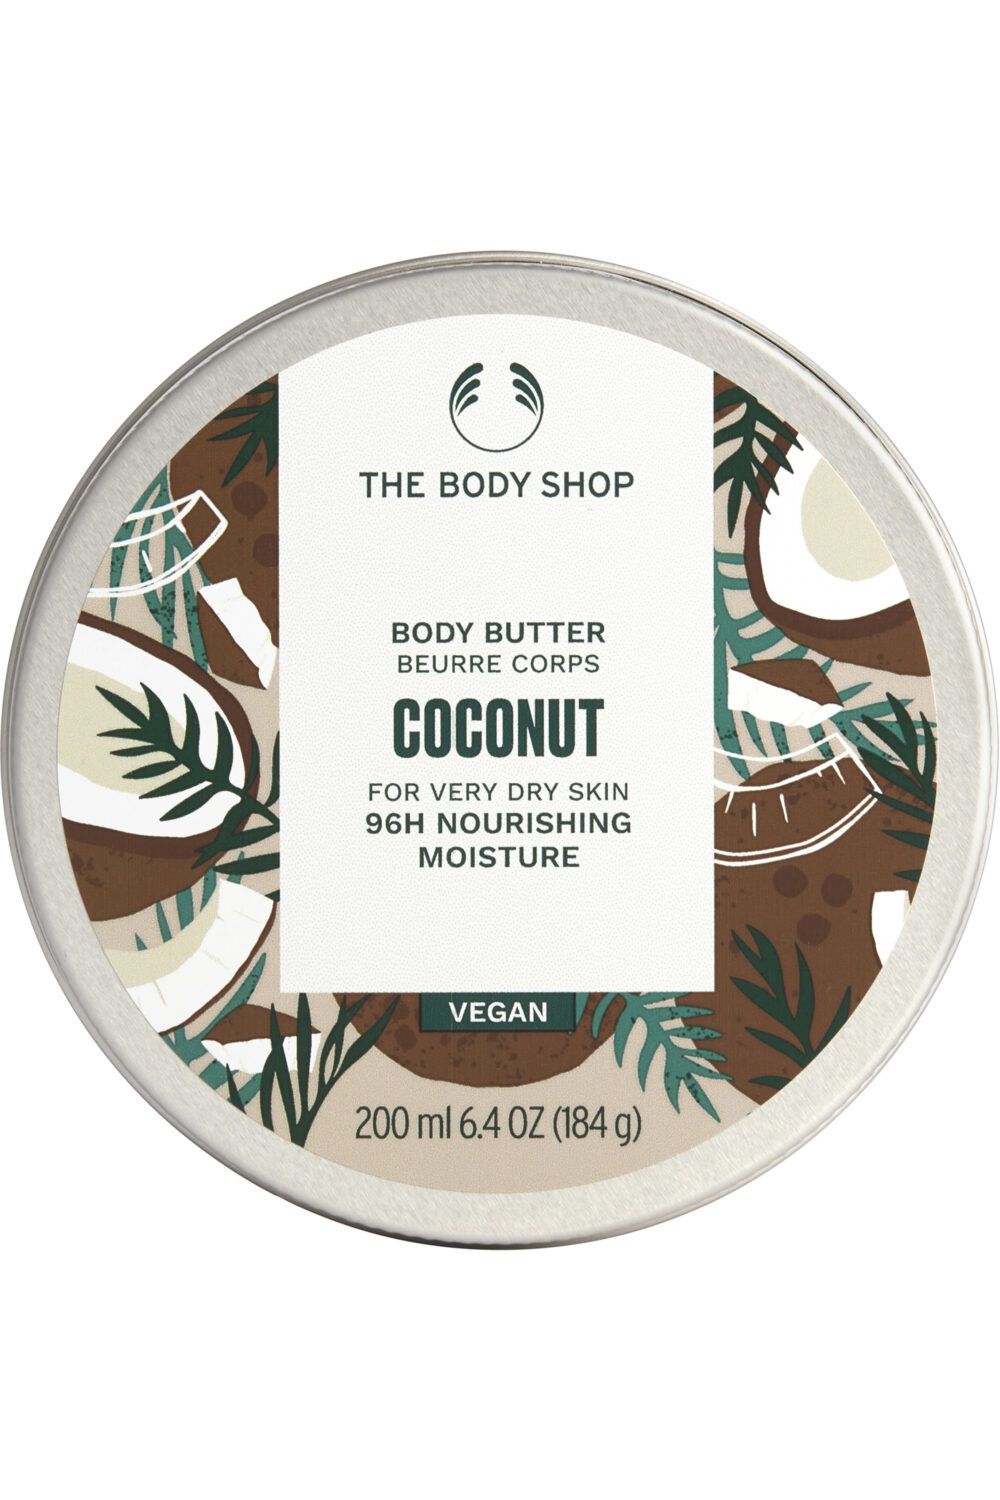 The Body Shop - Beurre corporel Noix de Coco